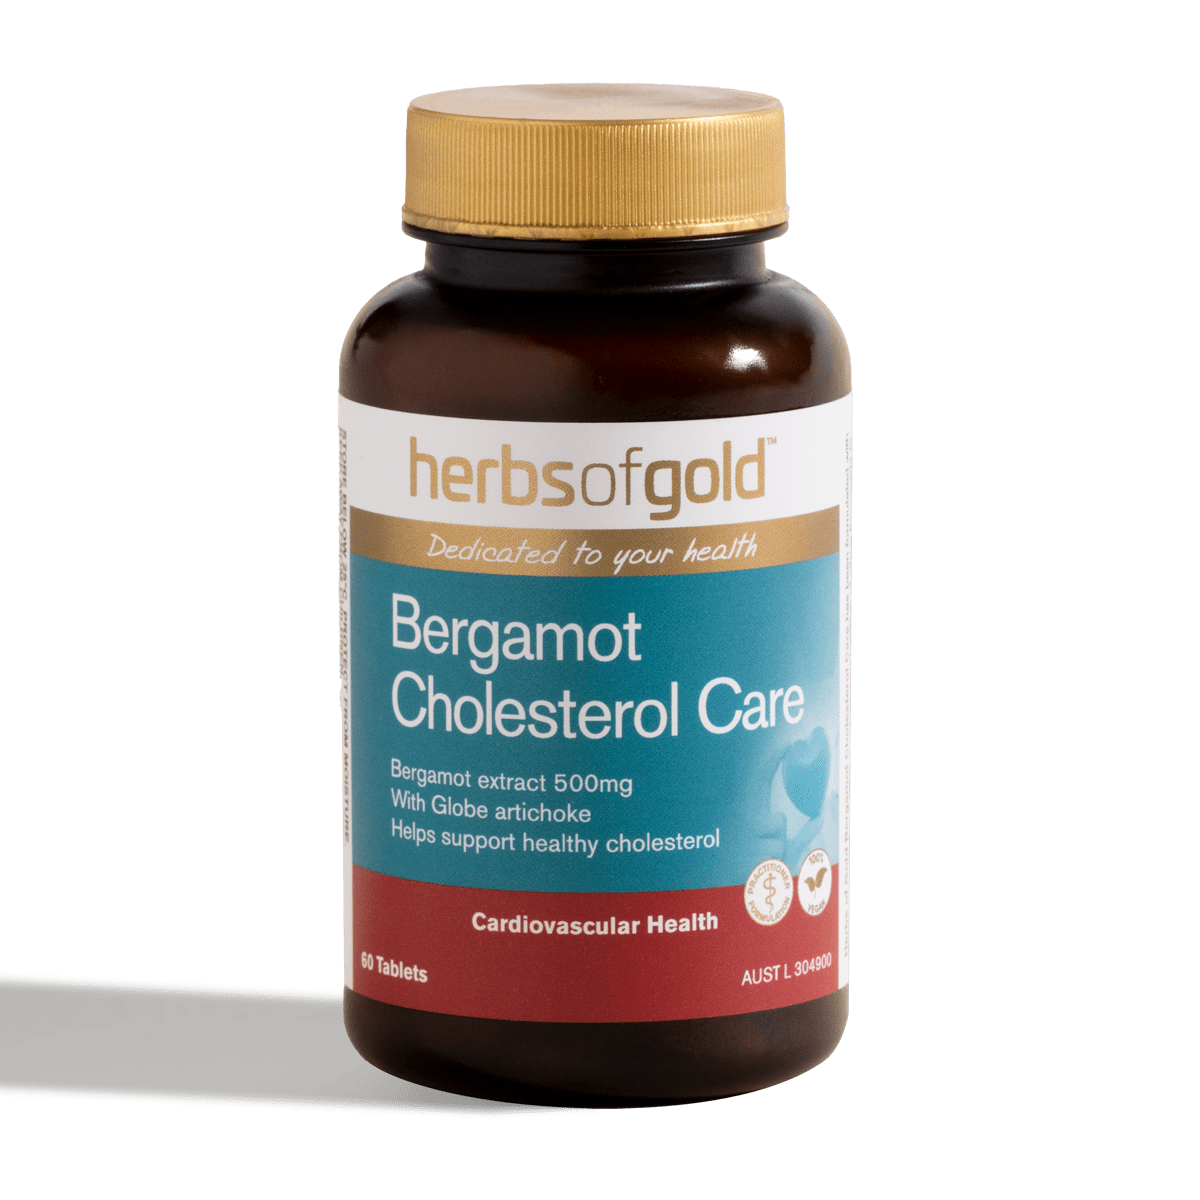 Herbs of Gold Bergamot Cholesterol Care 60 tablets